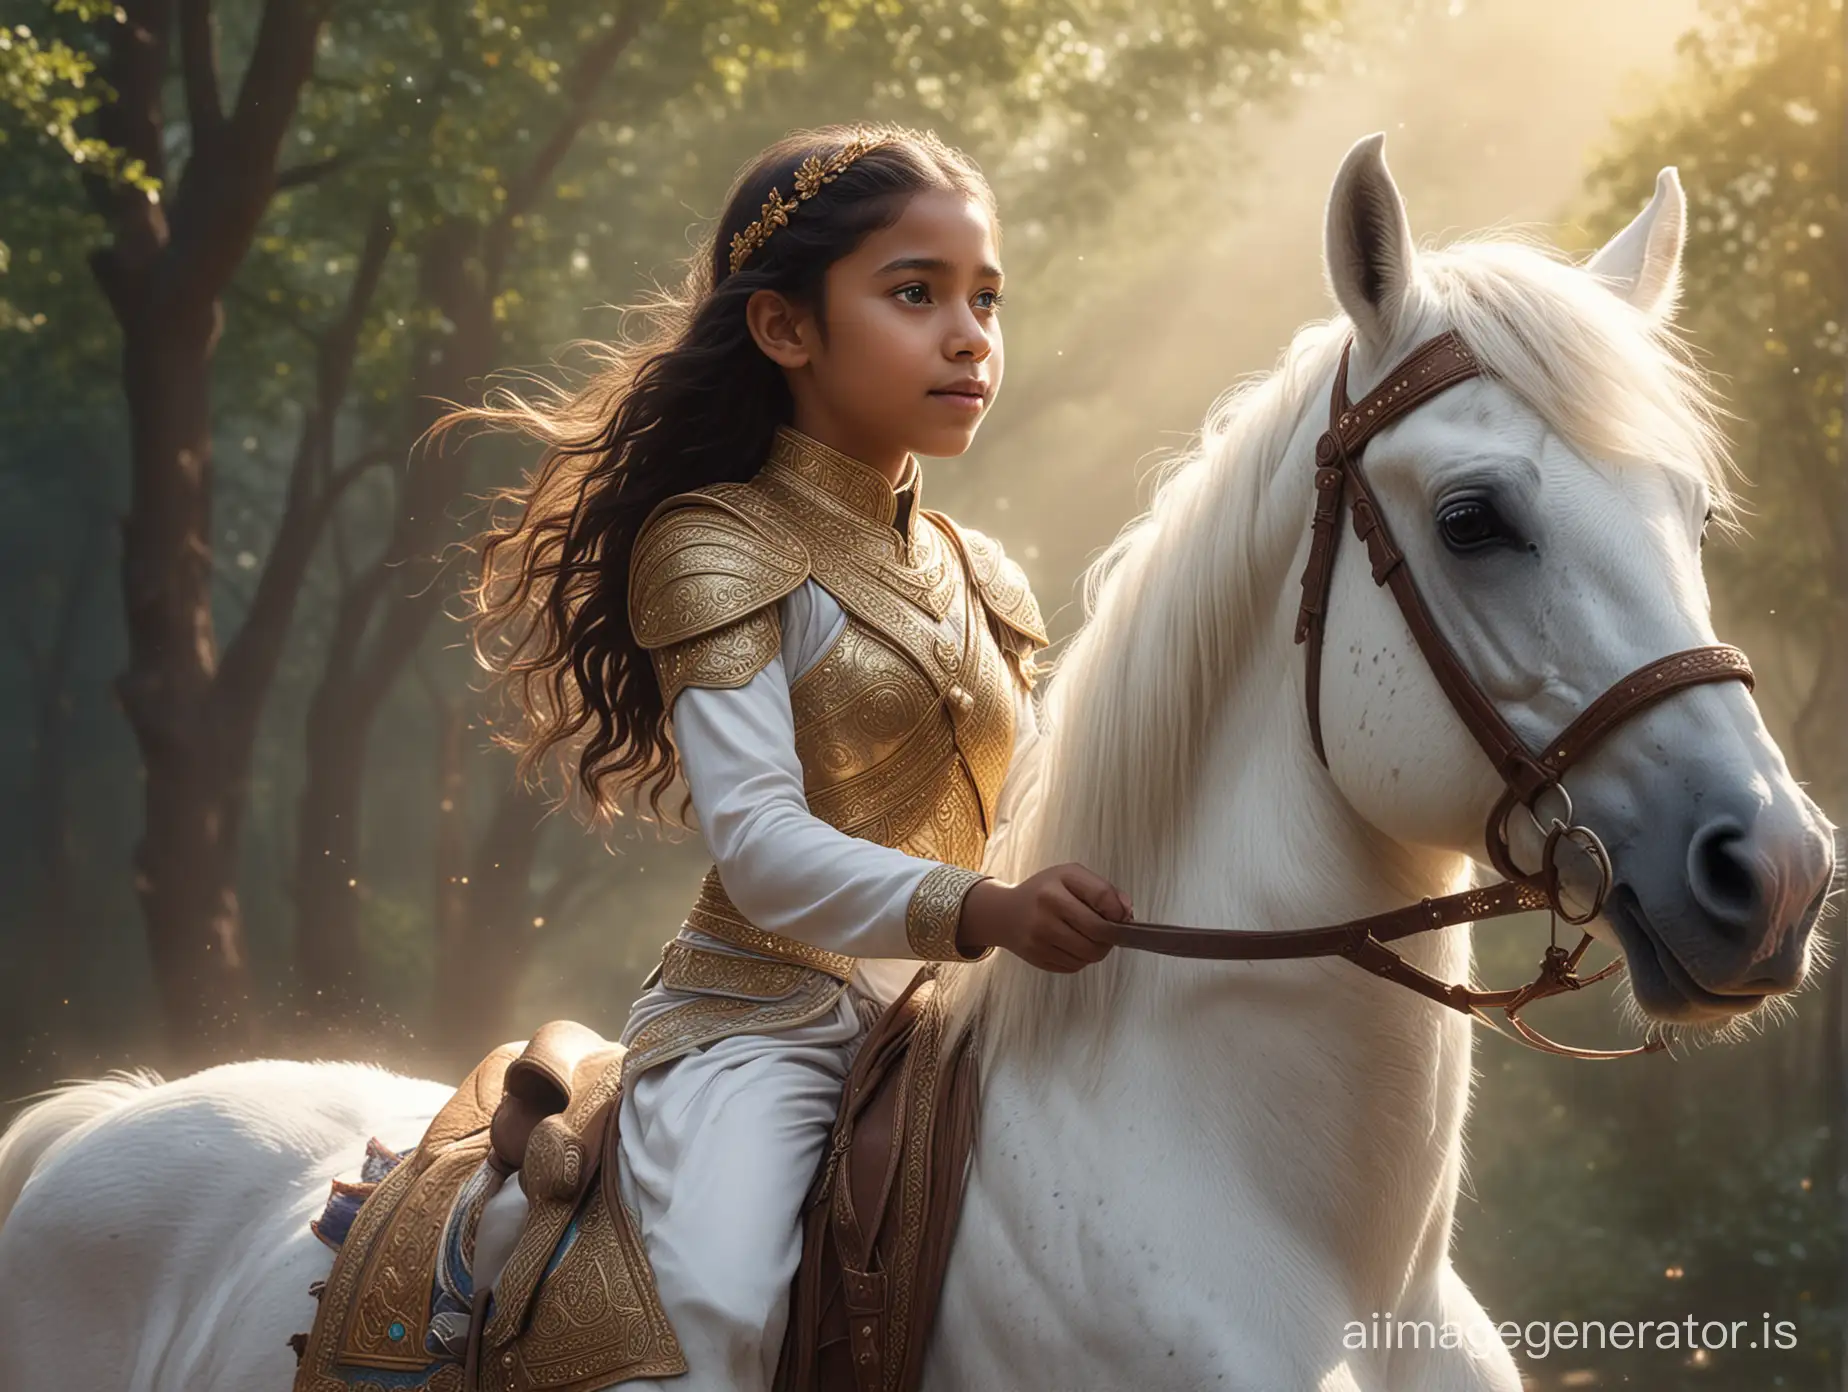 Young-Girl-Riding-White-Horse-Fantasy-Art-Album-Cover